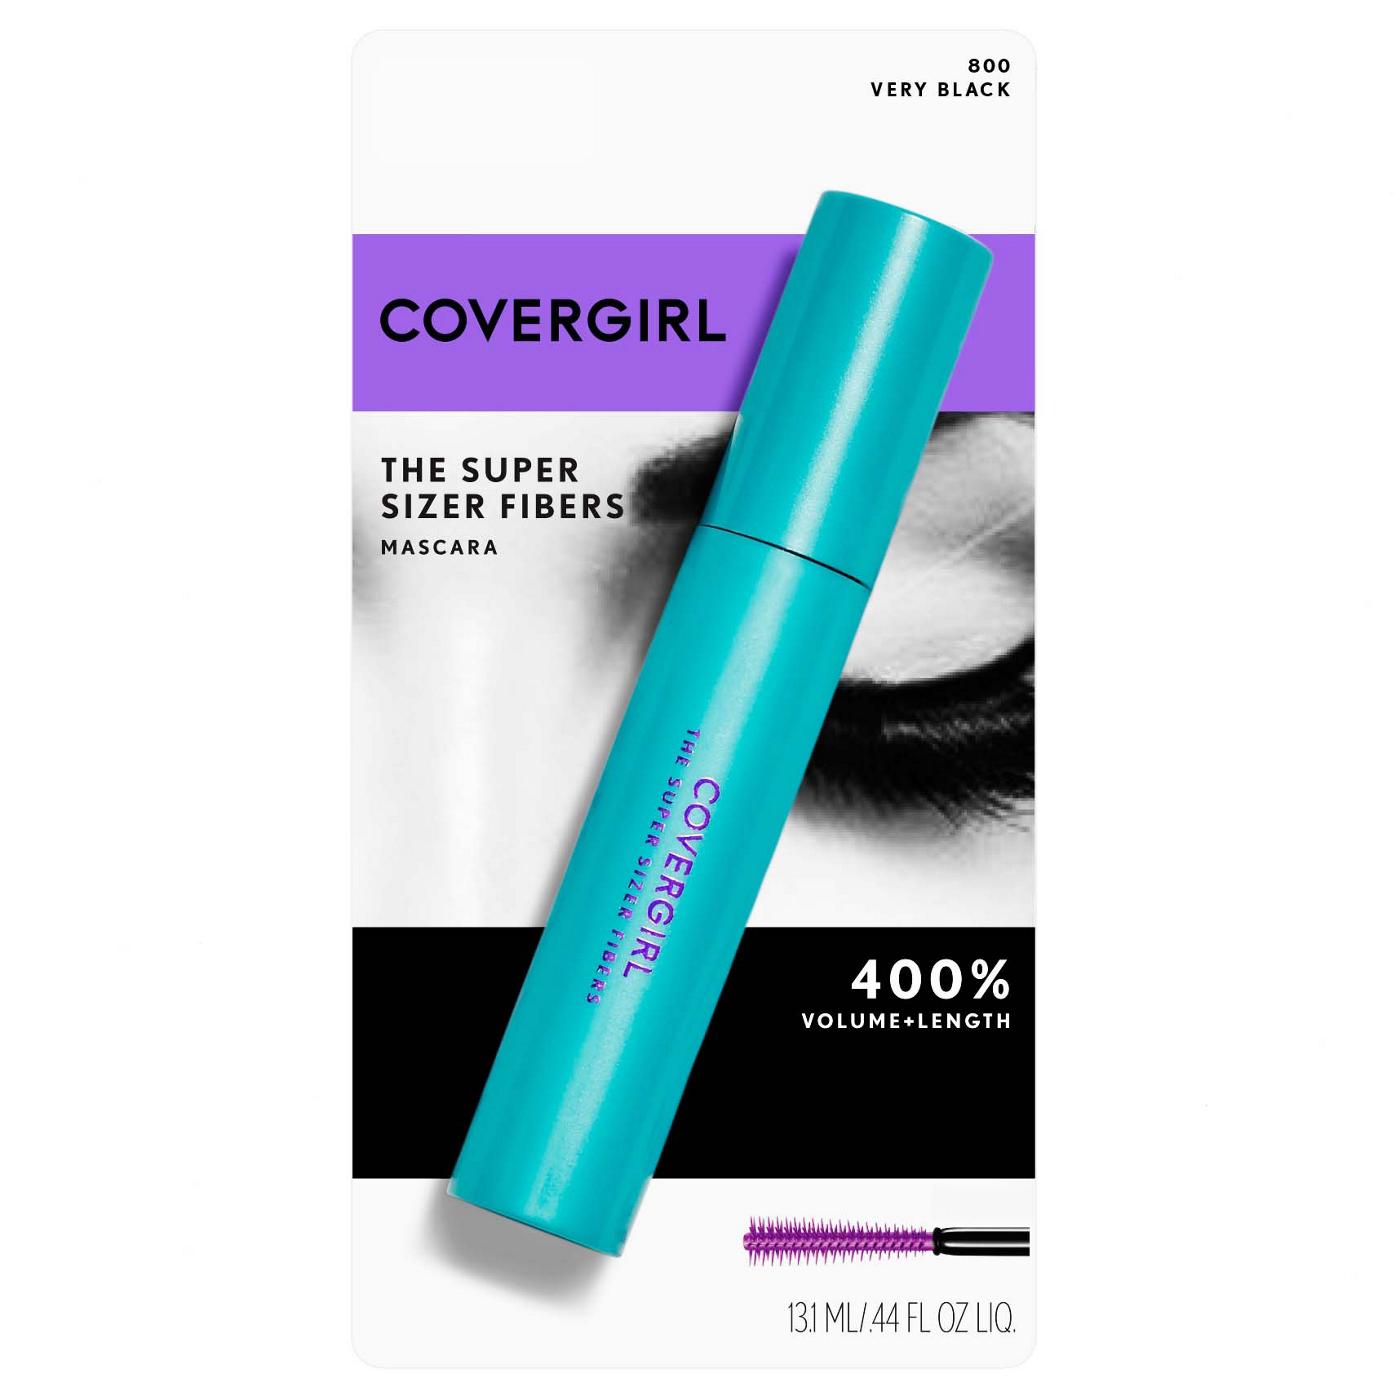 Covergirl Super Sizer Fibers Mascara 800 Very Black; image 1 of 3